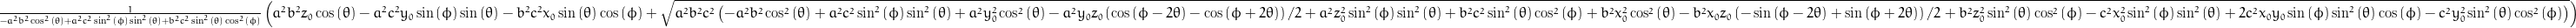 \frac{1}{- a^{2} b^{2} \cos^{2}{\left (\theta \right )} + a^{2} c^{2} \sin^{2}{\left (\phi \right )} \sin^{2}{\left (\theta \right )} + b^{2} c^{2} \sin^{2}{\left (\theta \right )} \cos^{2}{\left (\phi \right )}} \left(a^{2} b^{2} z_{0} \cos{\left (\theta \right )} - a^{2} c^{2} y_{0} \sin{\left (\phi \right )} \sin{\left (\theta \right )} - b^{2} c^{2} x_{0} \sin{\left (\theta \right )} \cos{\left (\phi \right )} + \sqrt{a^{2} b^{2} c^{2} \left(- a^{2} b^{2} \cos^{2}{\left (\theta \right )} + a^{2} c^{2} \sin^{2}{\left (\phi \right )} \sin^{2}{\left (\theta \right )} + a^{2} y_{0}^{2} \cos^{2}{\left (\theta \right )} - \frac{y_{0} z_{0}}{2} a^{2} \left(\cos{\left (\phi - 2 \theta \right )} - \cos{\left (\phi + 2 \theta \right )}\right) + a^{2} z_{0}^{2} \sin^{2}{\left (\phi \right )} \sin^{2}{\left (\theta \right )} + b^{2} c^{2} \sin^{2}{\left (\theta \right )} \cos^{2}{\left (\phi \right )} + b^{2} x_{0}^{2} \cos^{2}{\left (\theta \right )} - \frac{x_{0} z_{0}}{2} b^{2} \left(- \sin{\left (\phi - 2 \theta \right )} + \sin{\left (\phi + 2 \theta \right )}\right) + b^{2} z_{0}^{2} \sin^{2}{\left (\theta \right )} \cos^{2}{\left (\phi \right )} - c^{2} x_{0}^{2} \sin^{2}{\left (\phi \right )} \sin^{2}{\left (\theta \right )} + 2 c^{2} x_{0} y_{0} \sin{\left (\phi \right )} \sin^{2}{\left (\theta \right )} \cos{\left (\phi \right )} - c^{2} y_{0}^{2} \sin^{2}{\left (\theta \right )} \cos^{2}{\left (\phi \right )}\right)}\right)